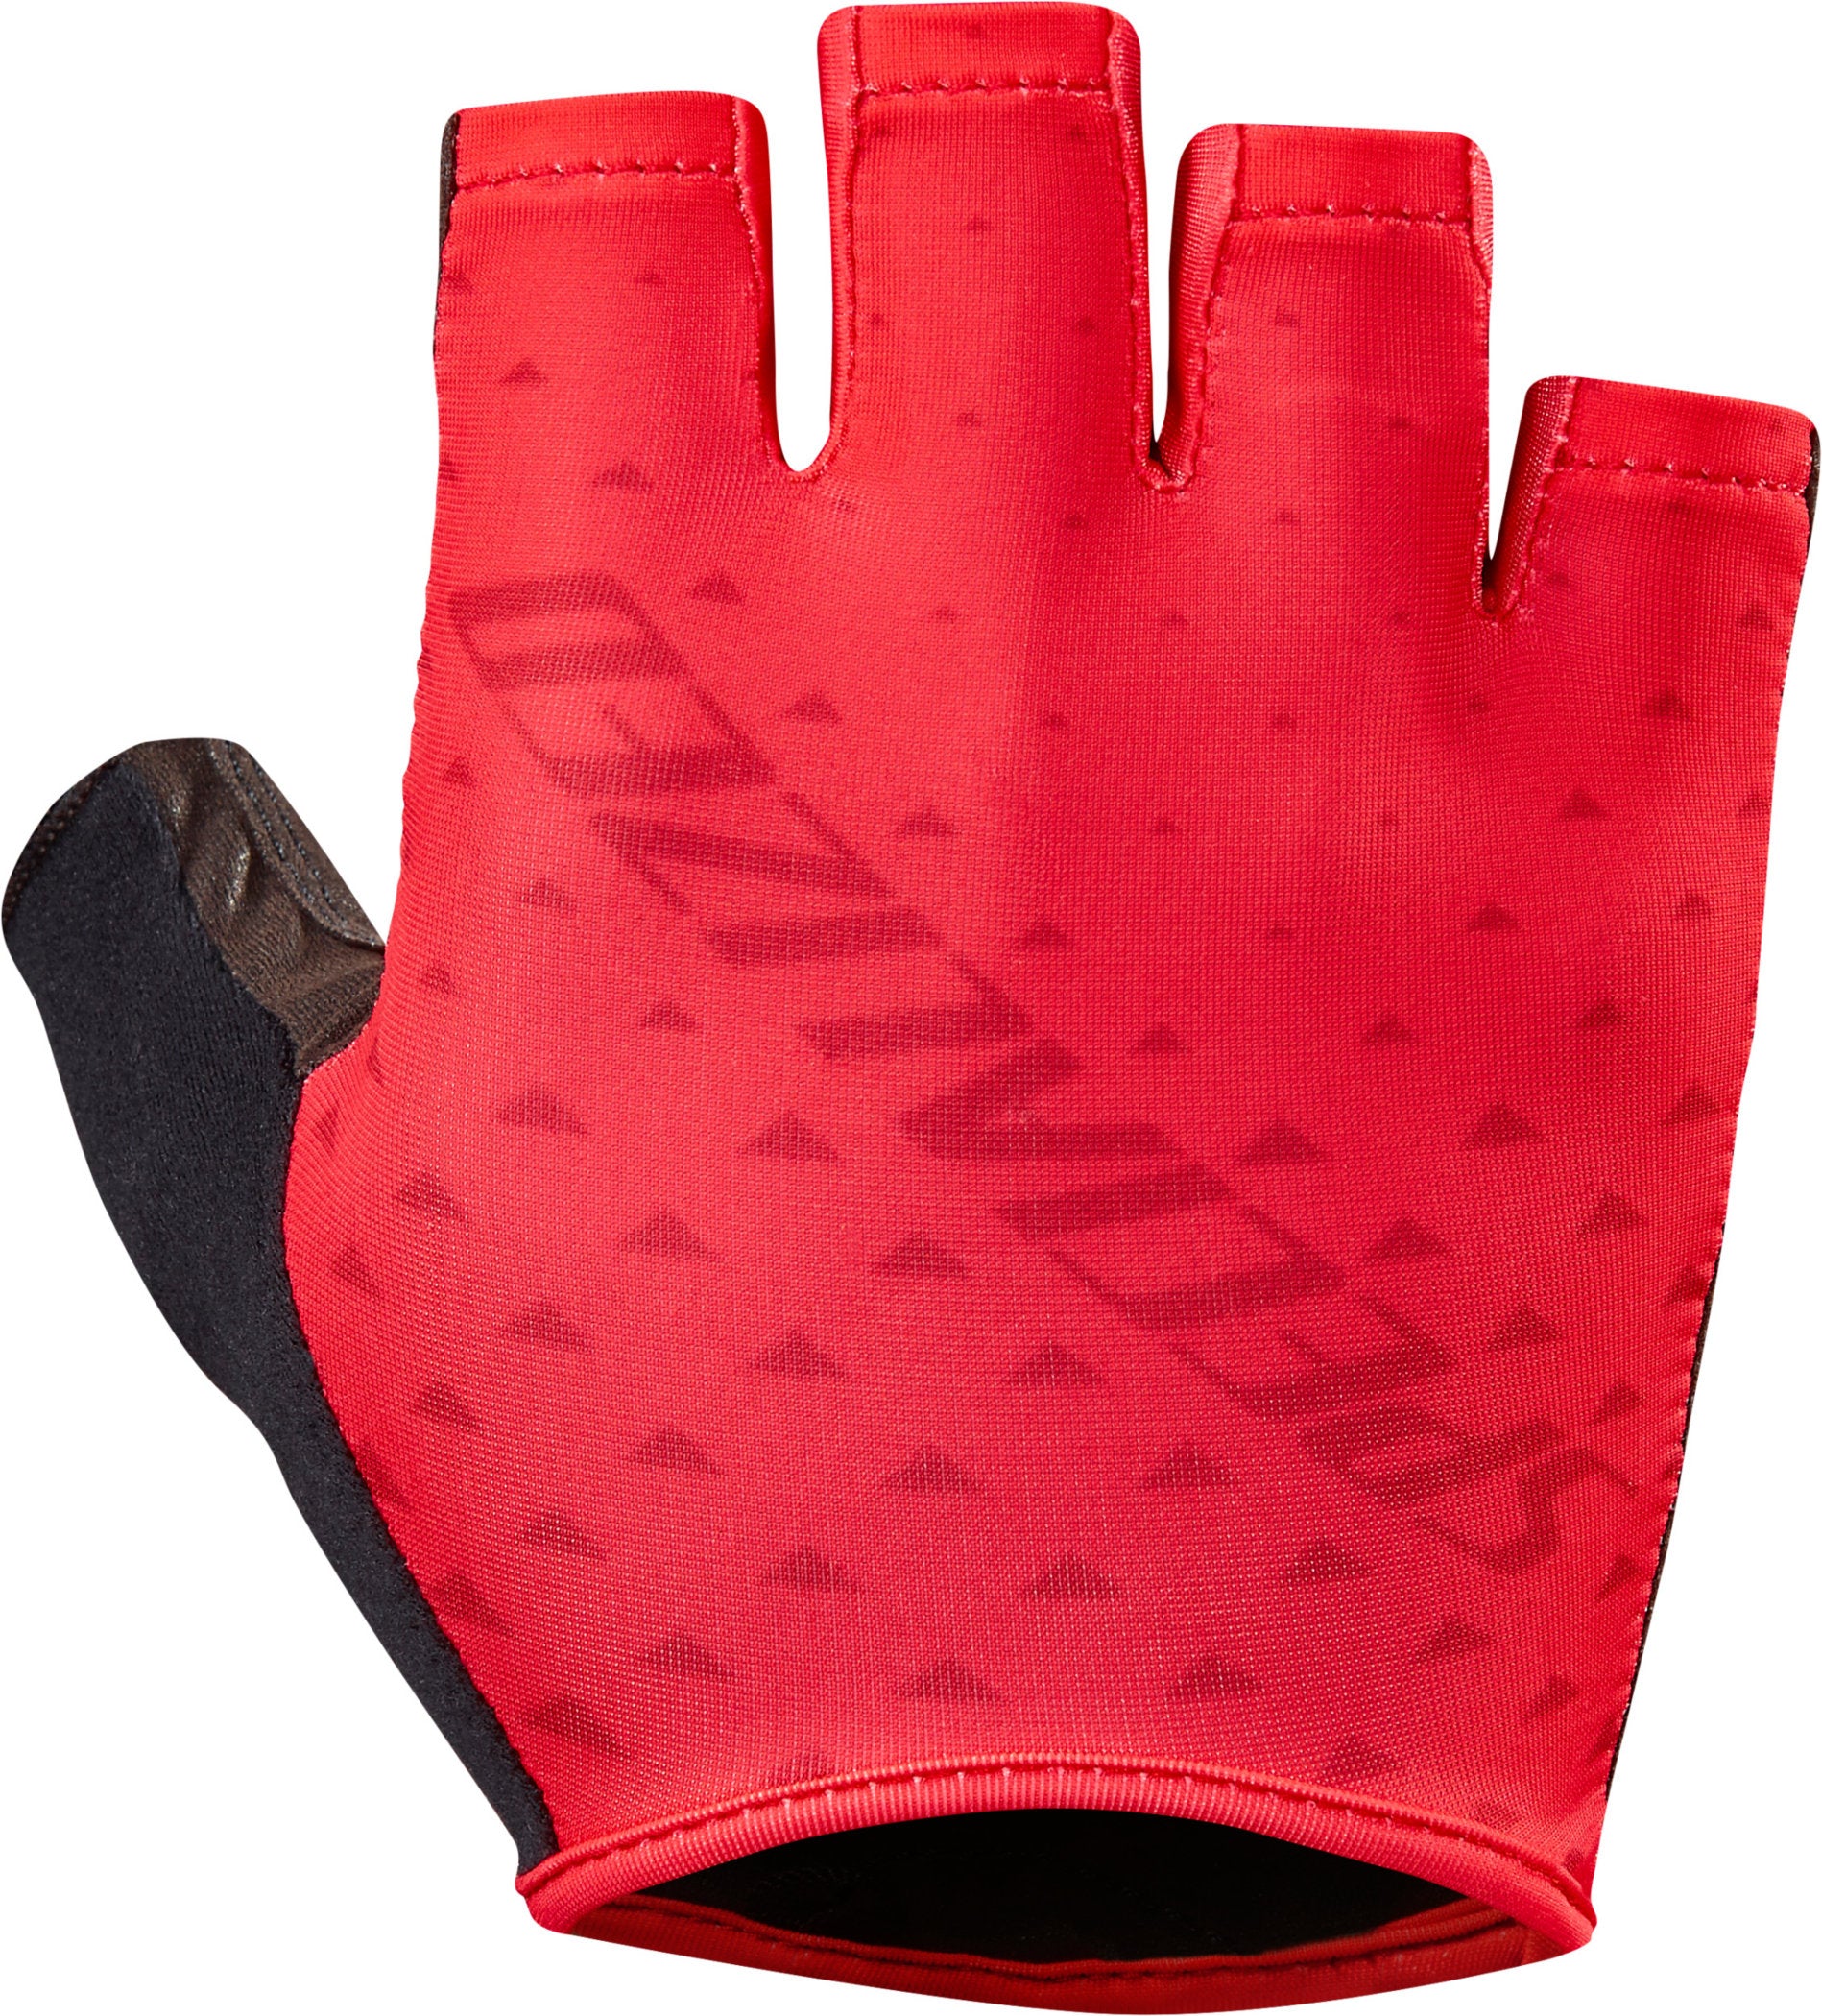 SL Pro Gloves